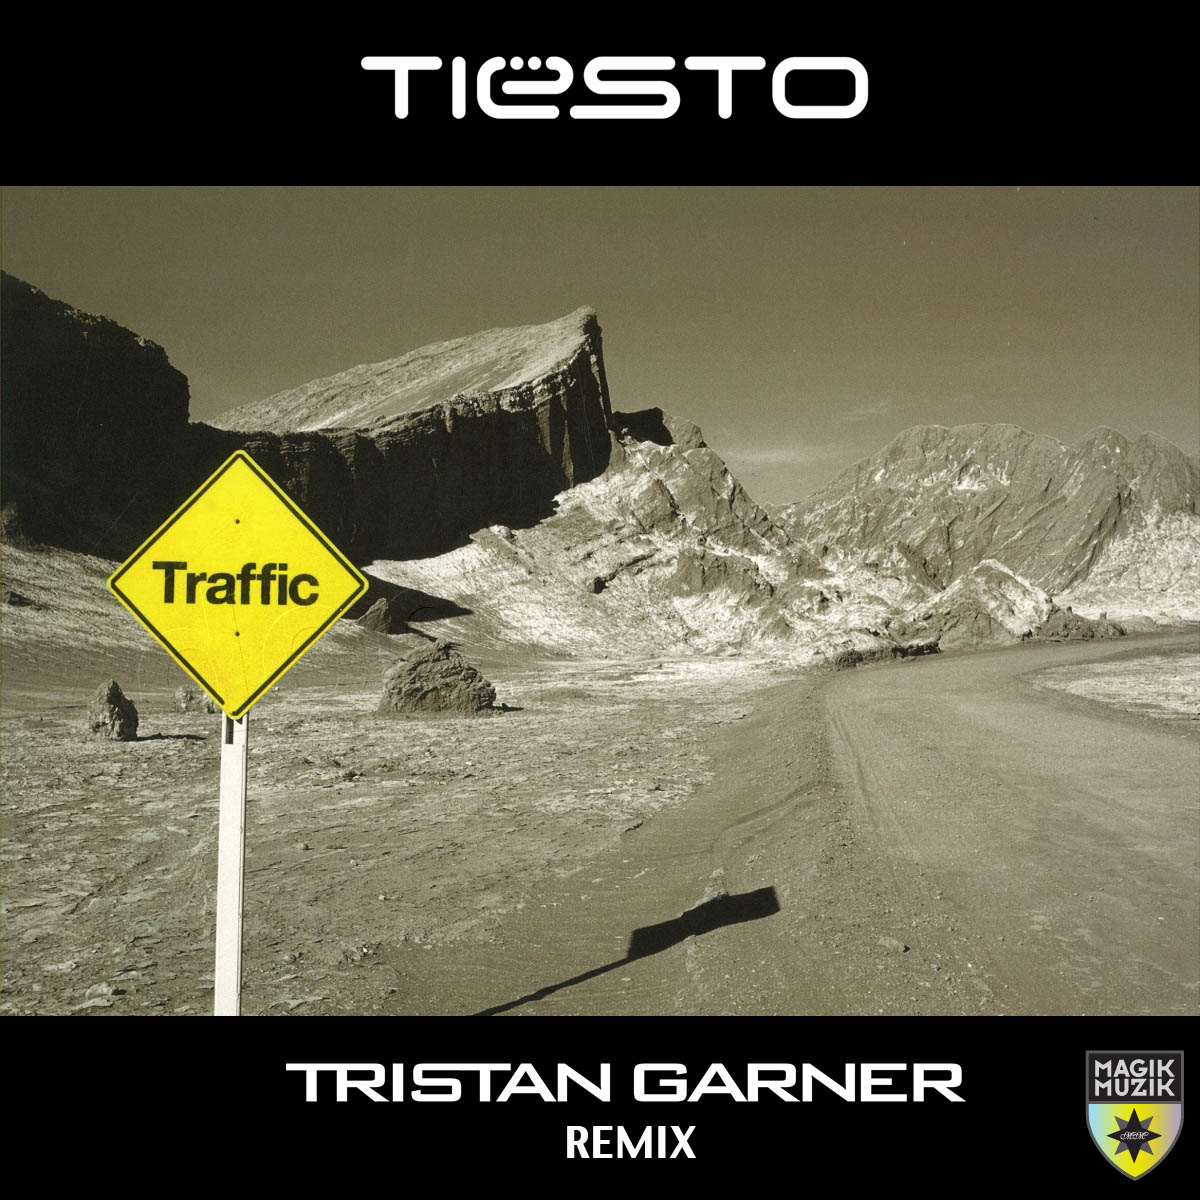 PREVIEW: Tiesto - Traffic (Tristan Garner Remix)